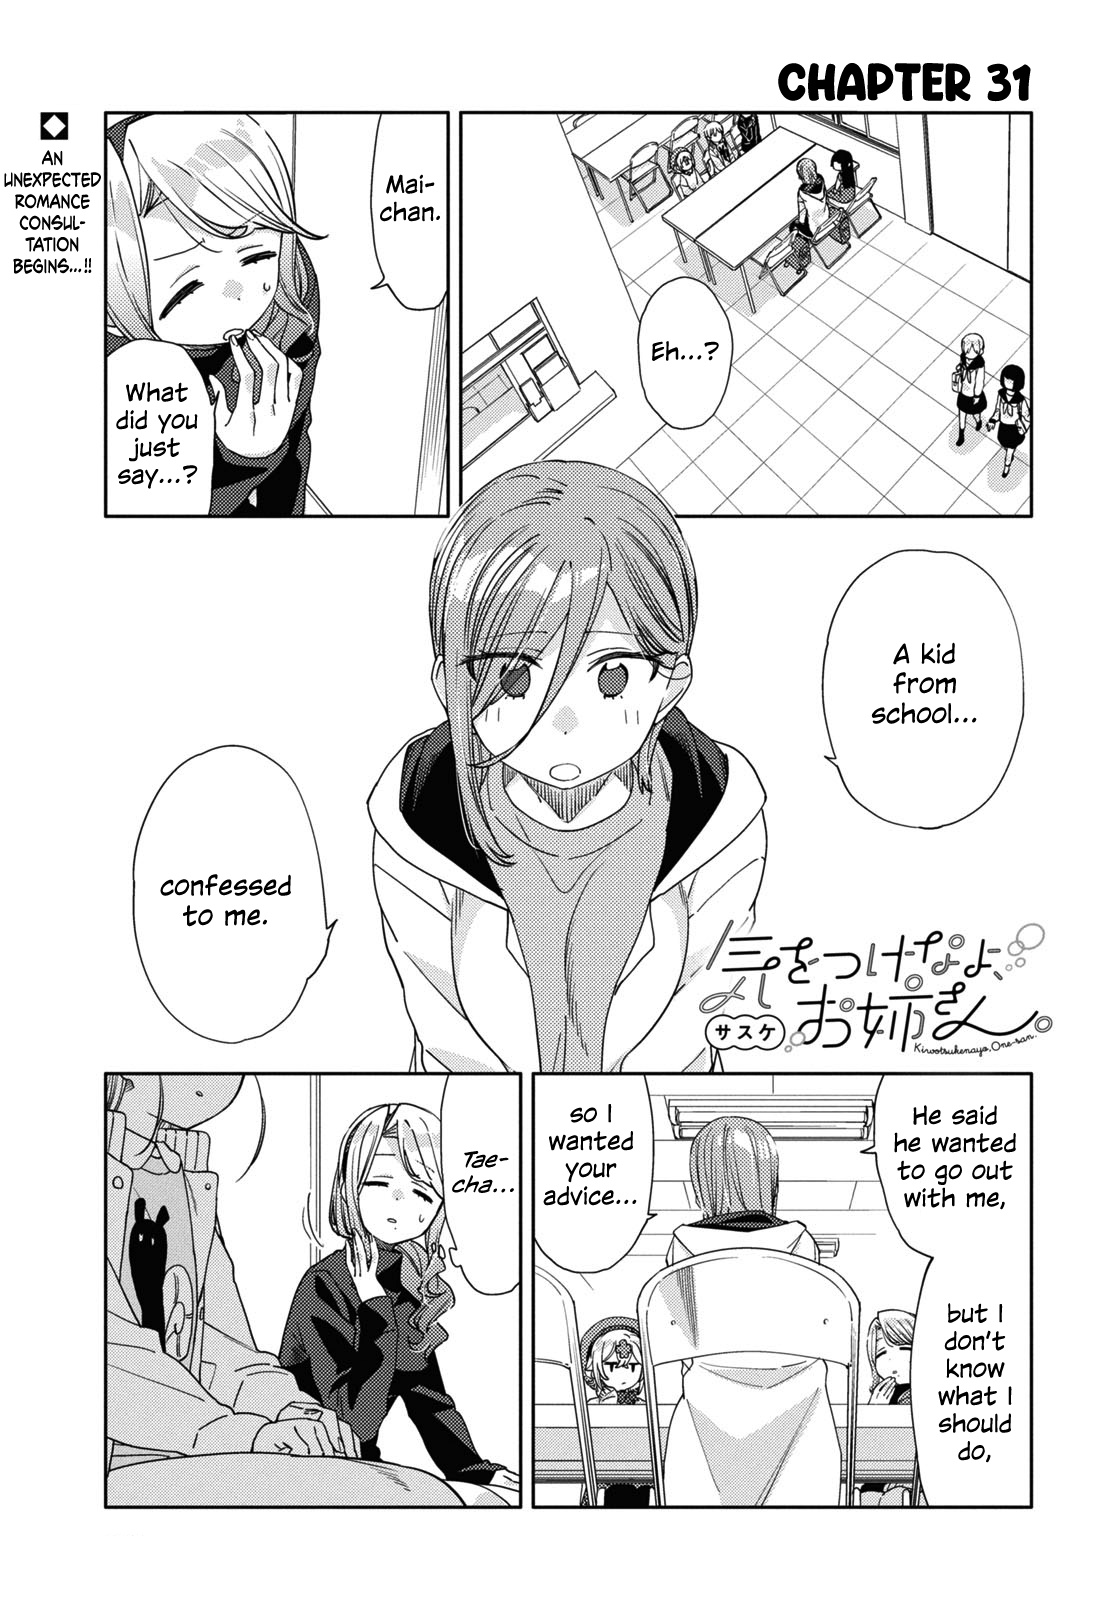 Be Careful, Onee-San. - Page 1